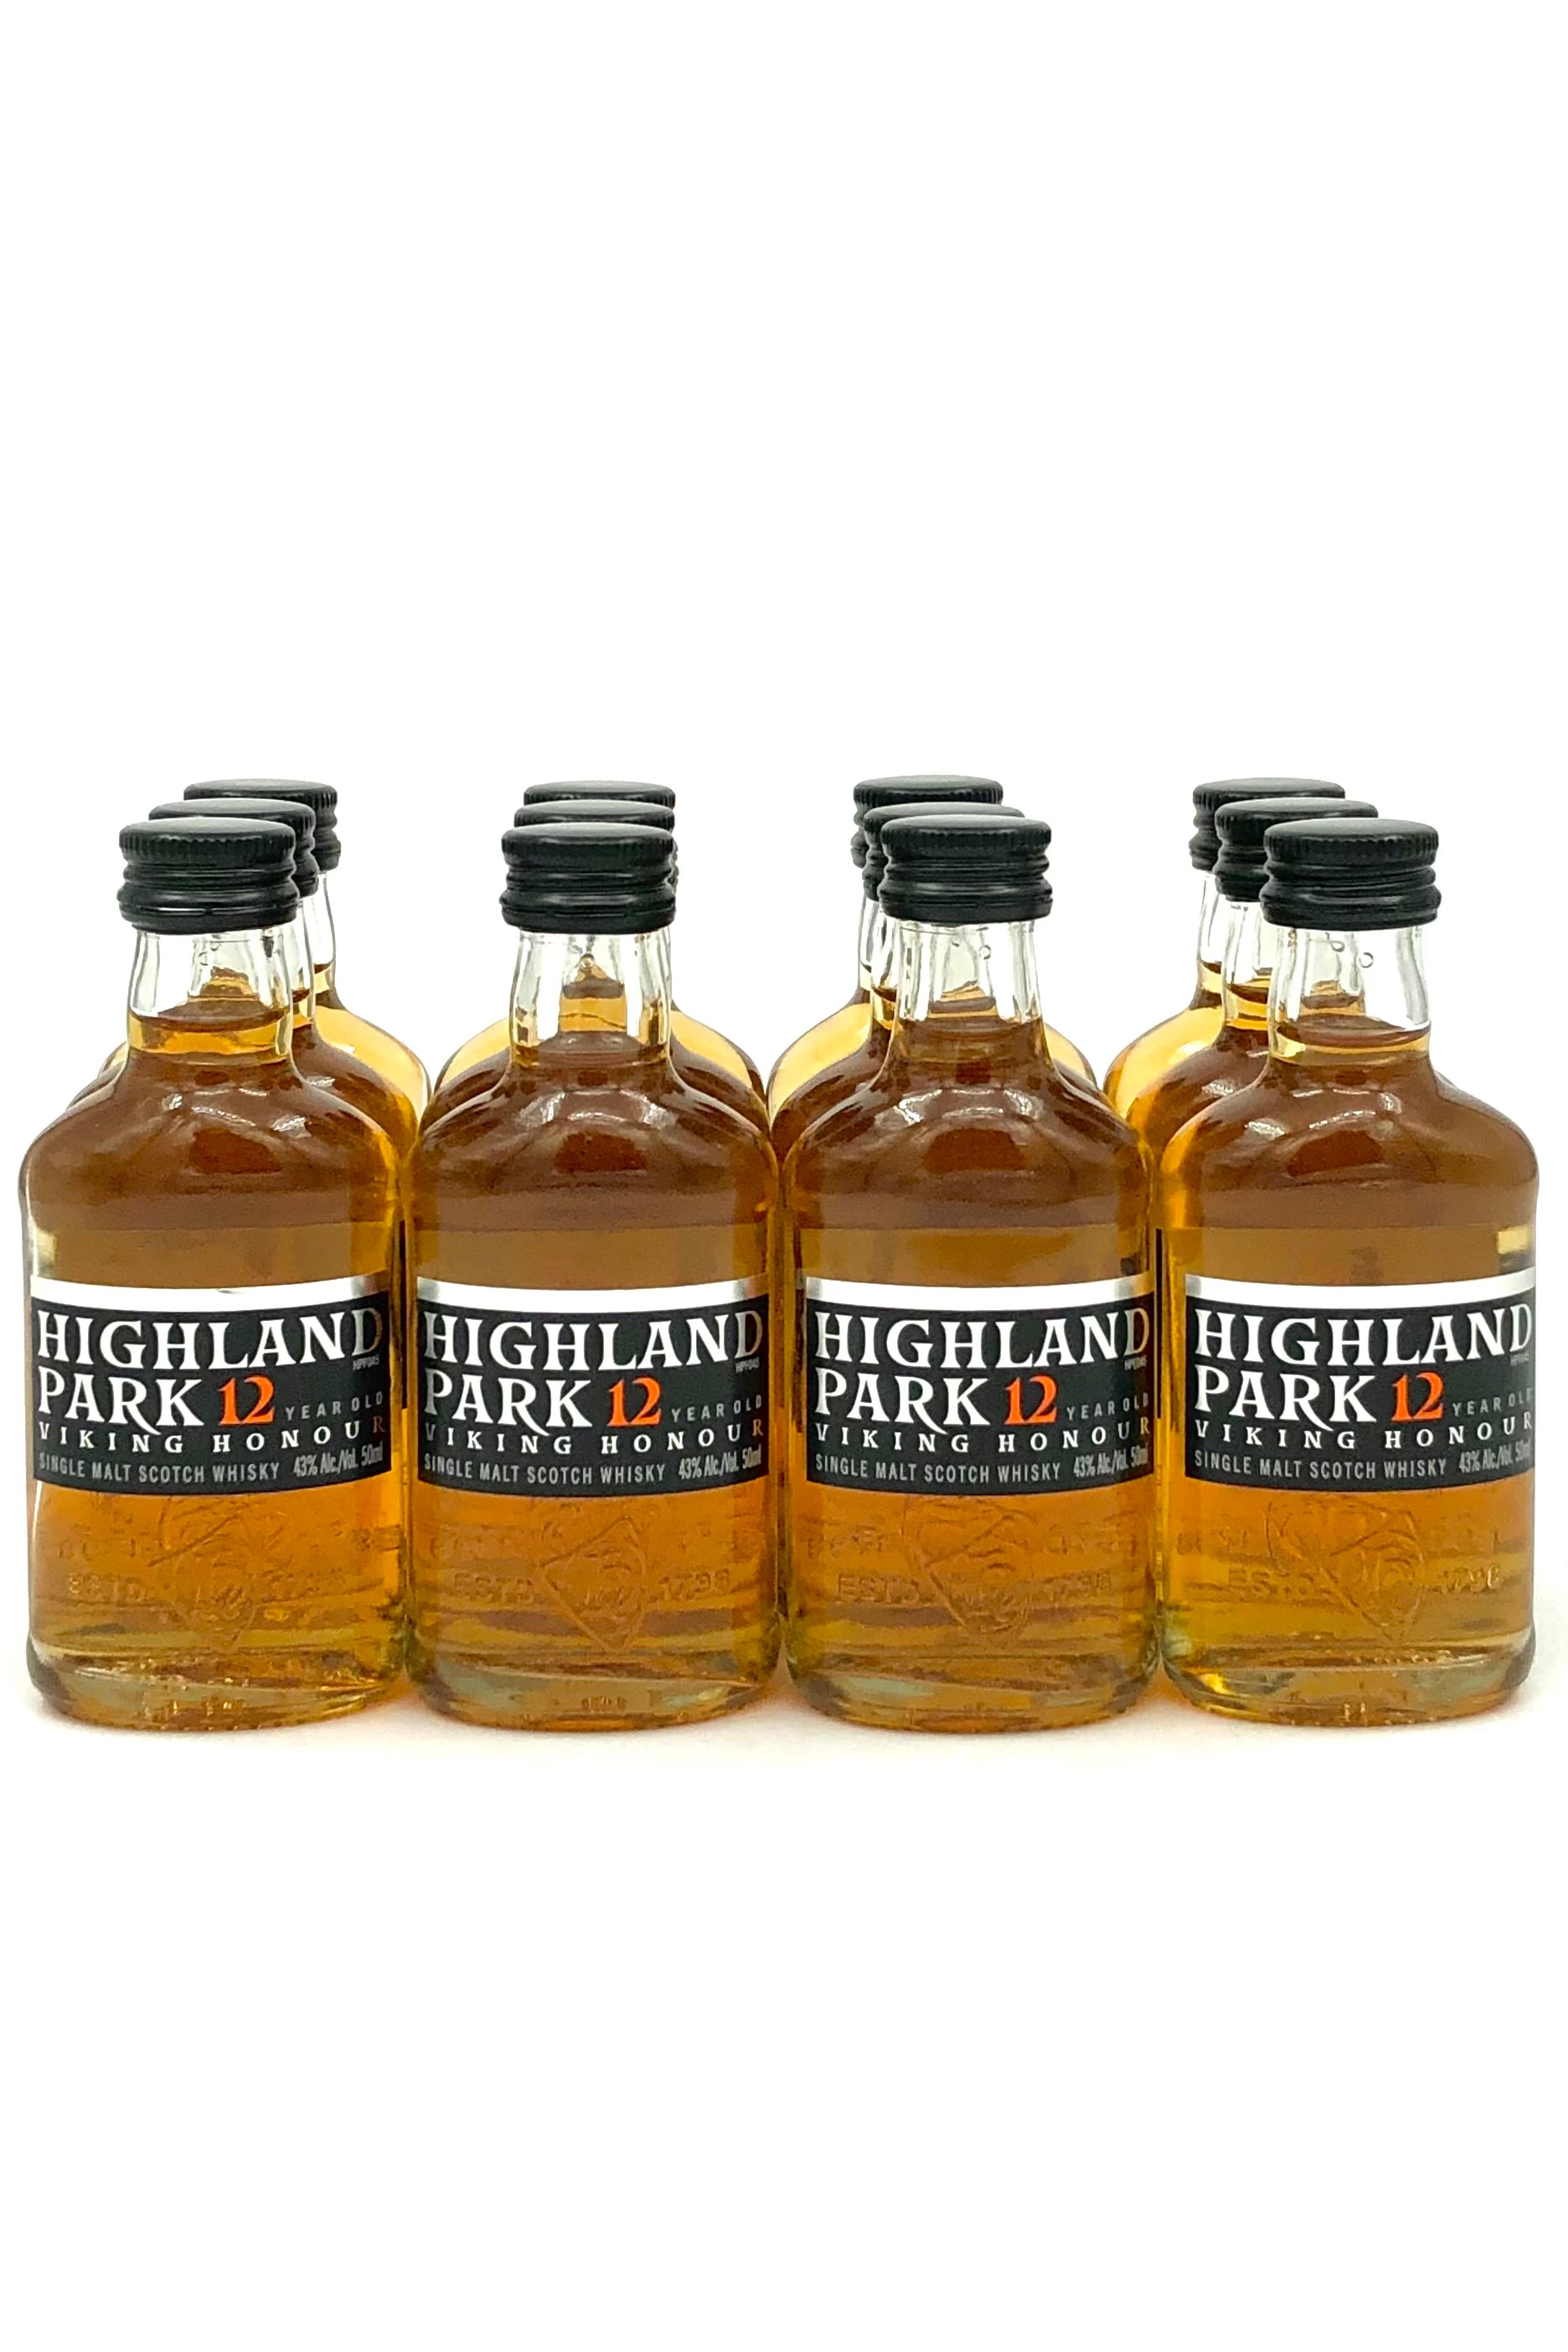 Buy Highland Park 12 Year Old Scotch Whisky 12 x 50 ml Online